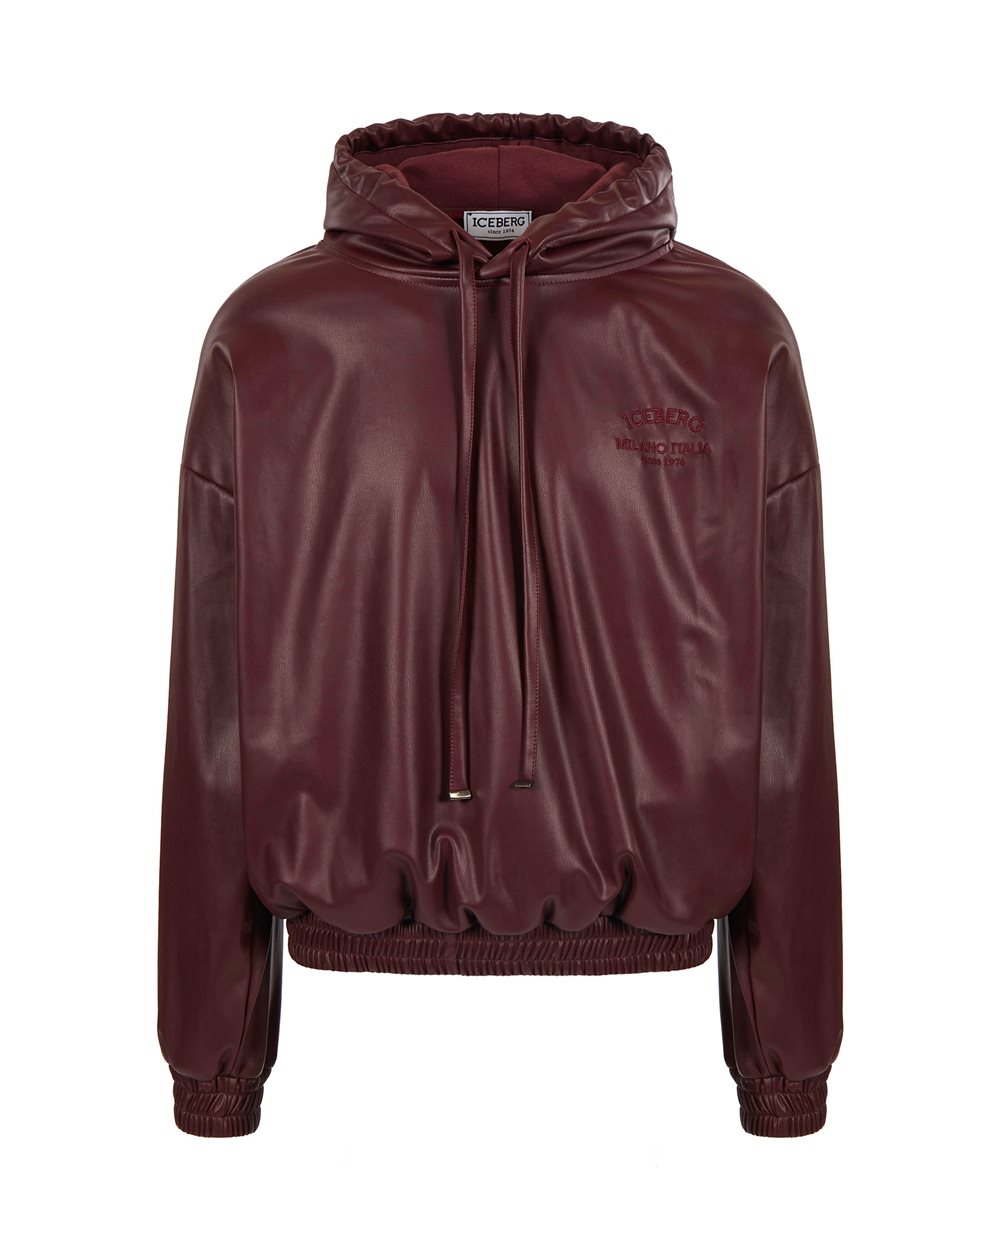 Eco-leather hooded sweatshirt - Fashion Show Man | Iceberg - Official Website